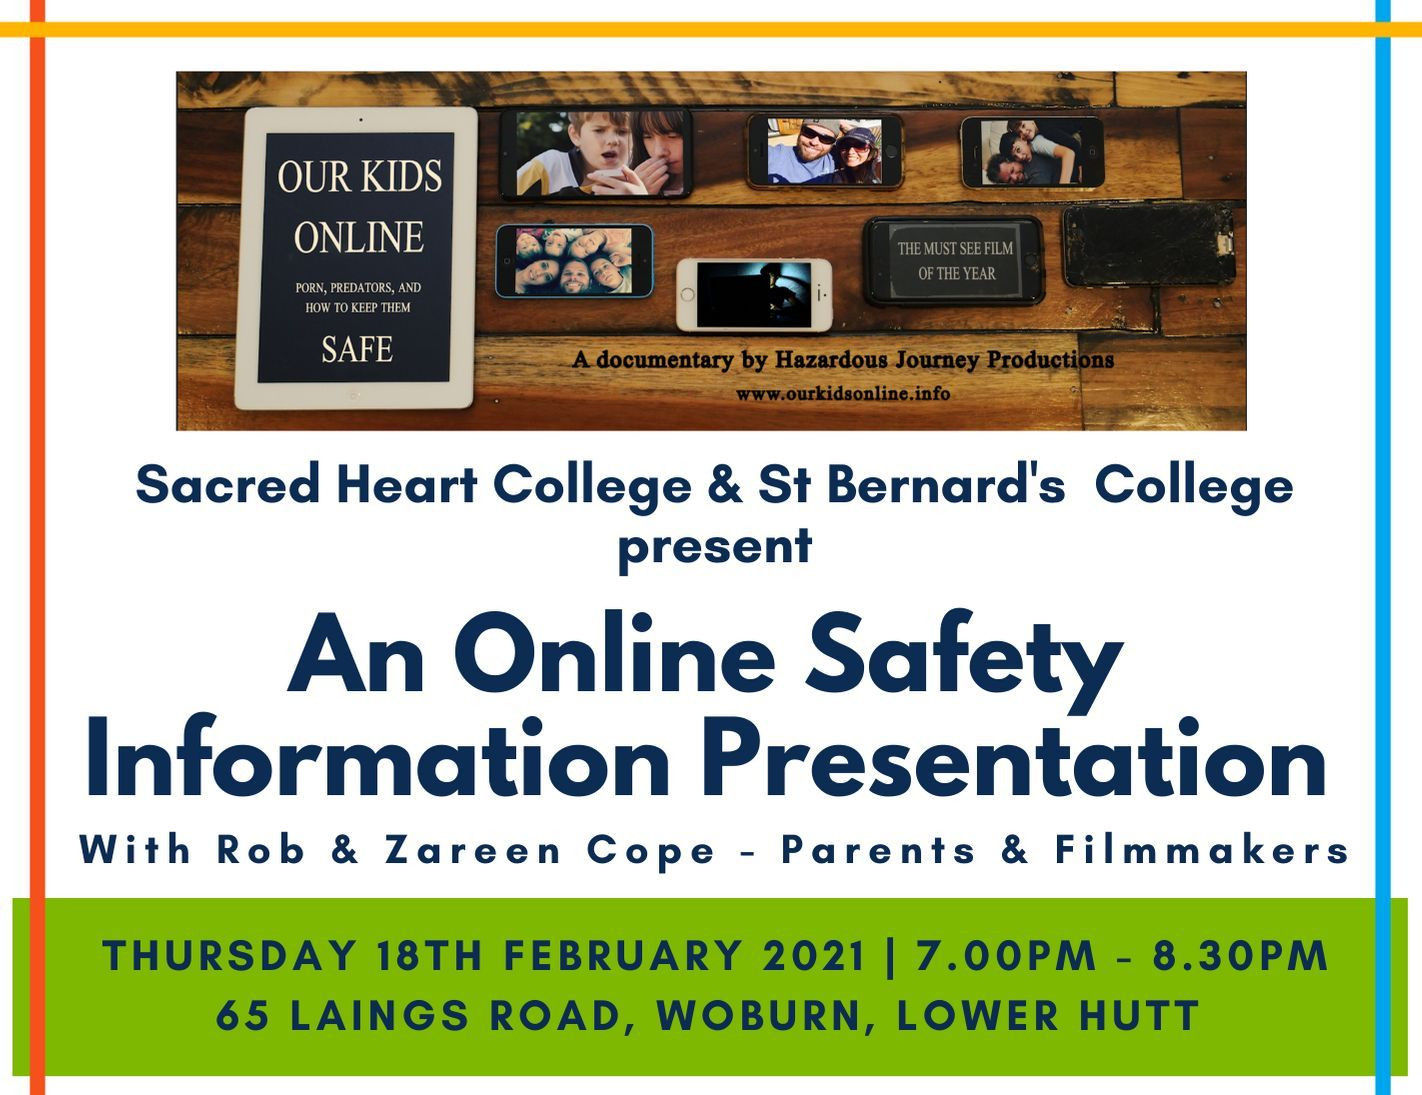 Online Safety Information Presentation